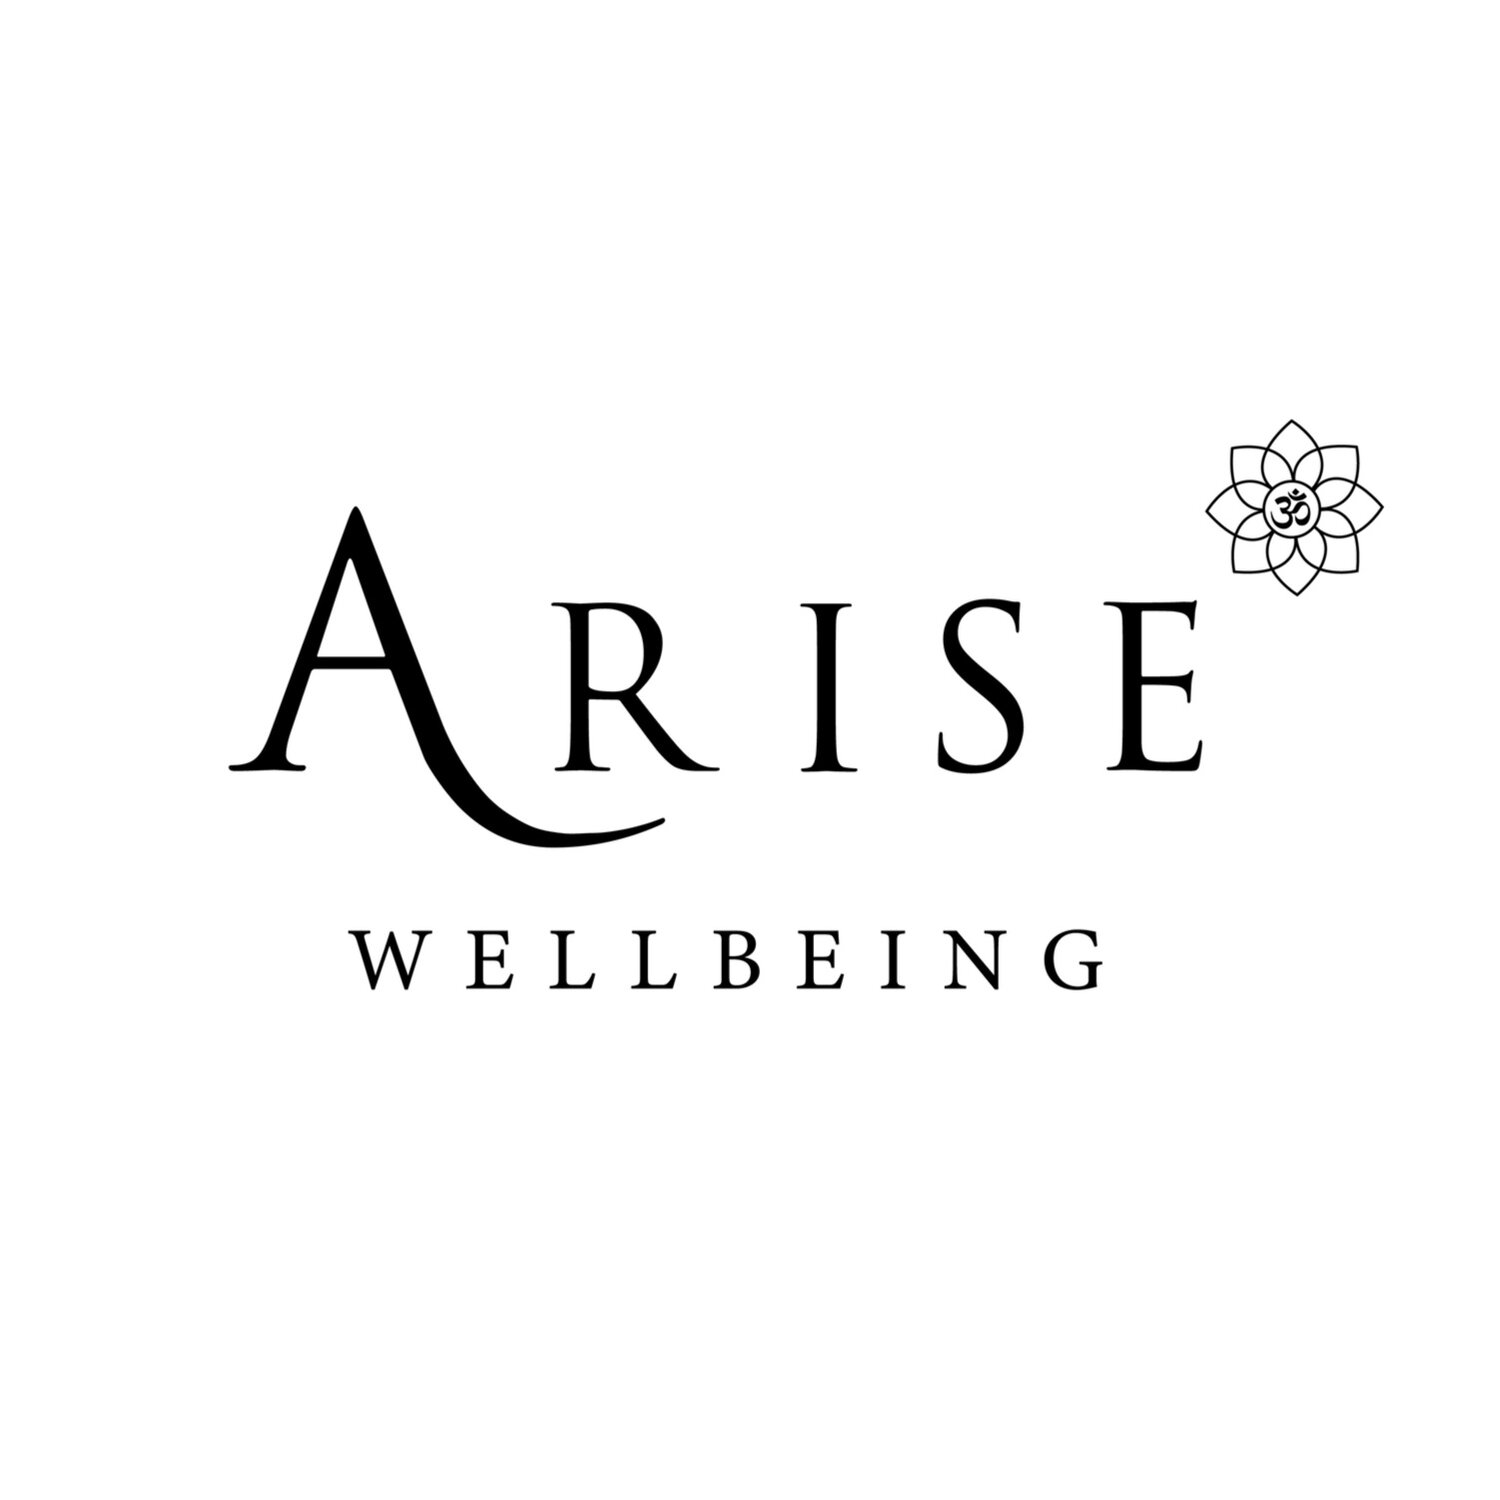  Arise Wellbeing